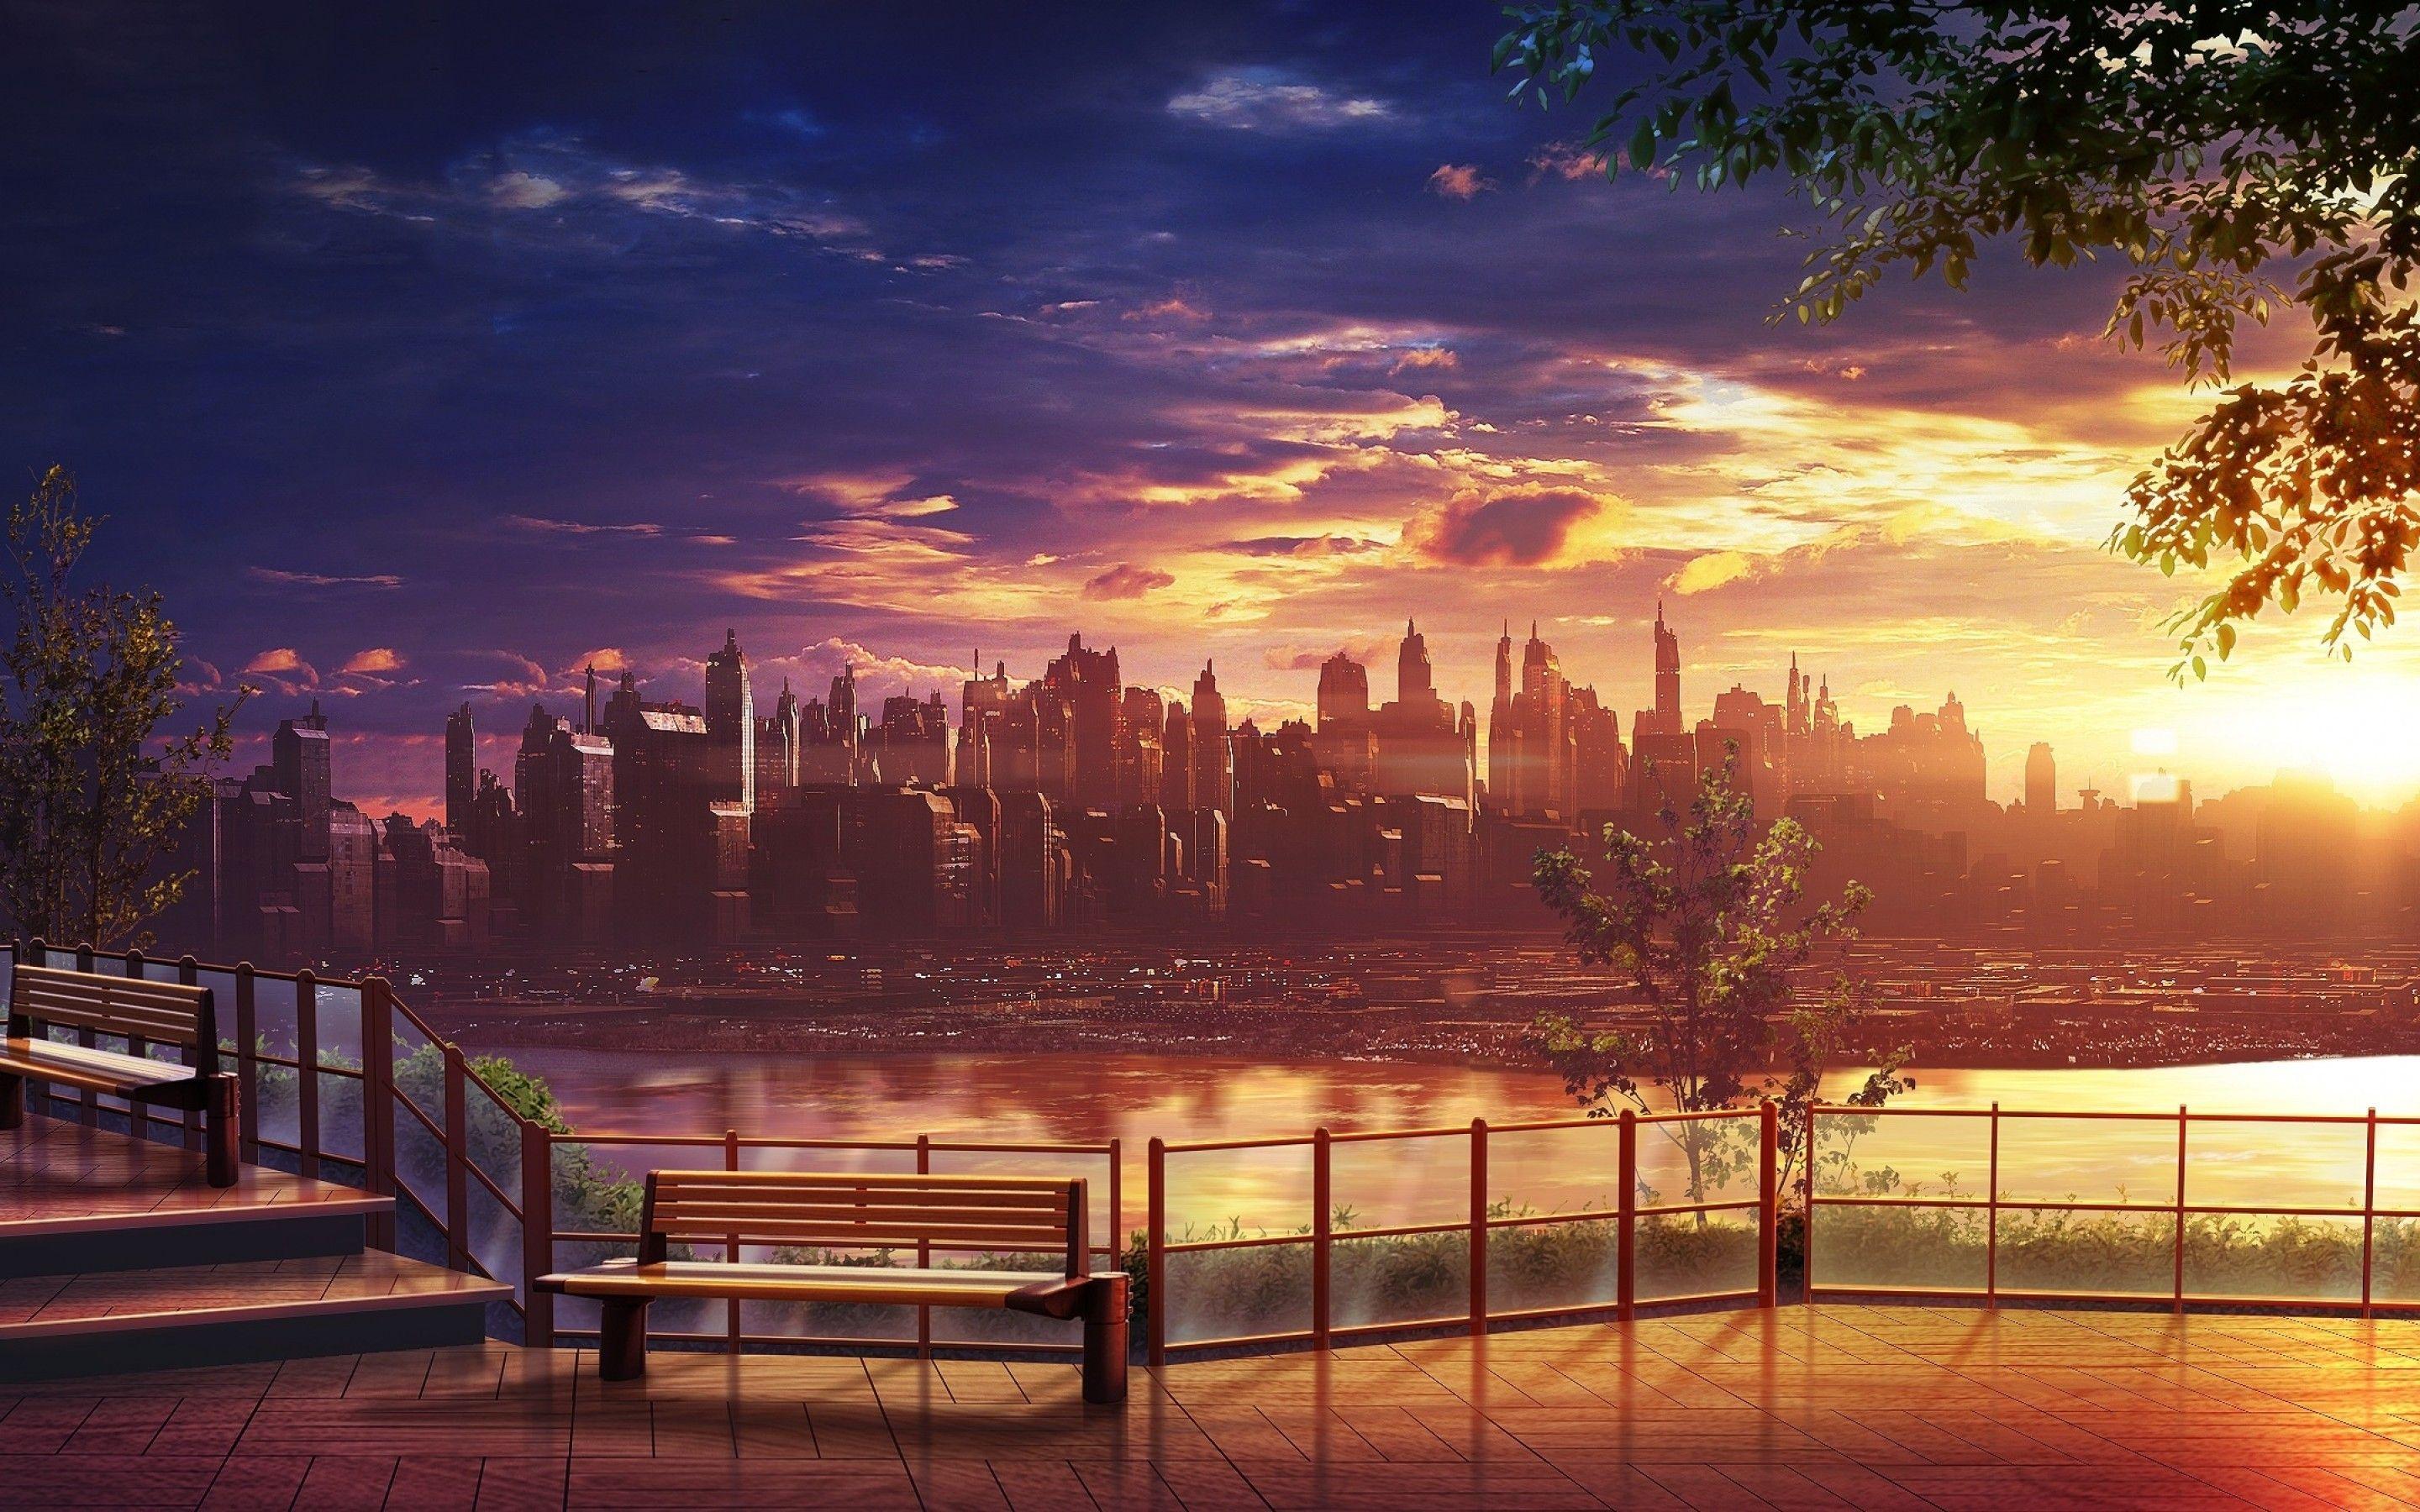 Anime Skyline Wallpapers Top Free Anime Skyline Backgrounds